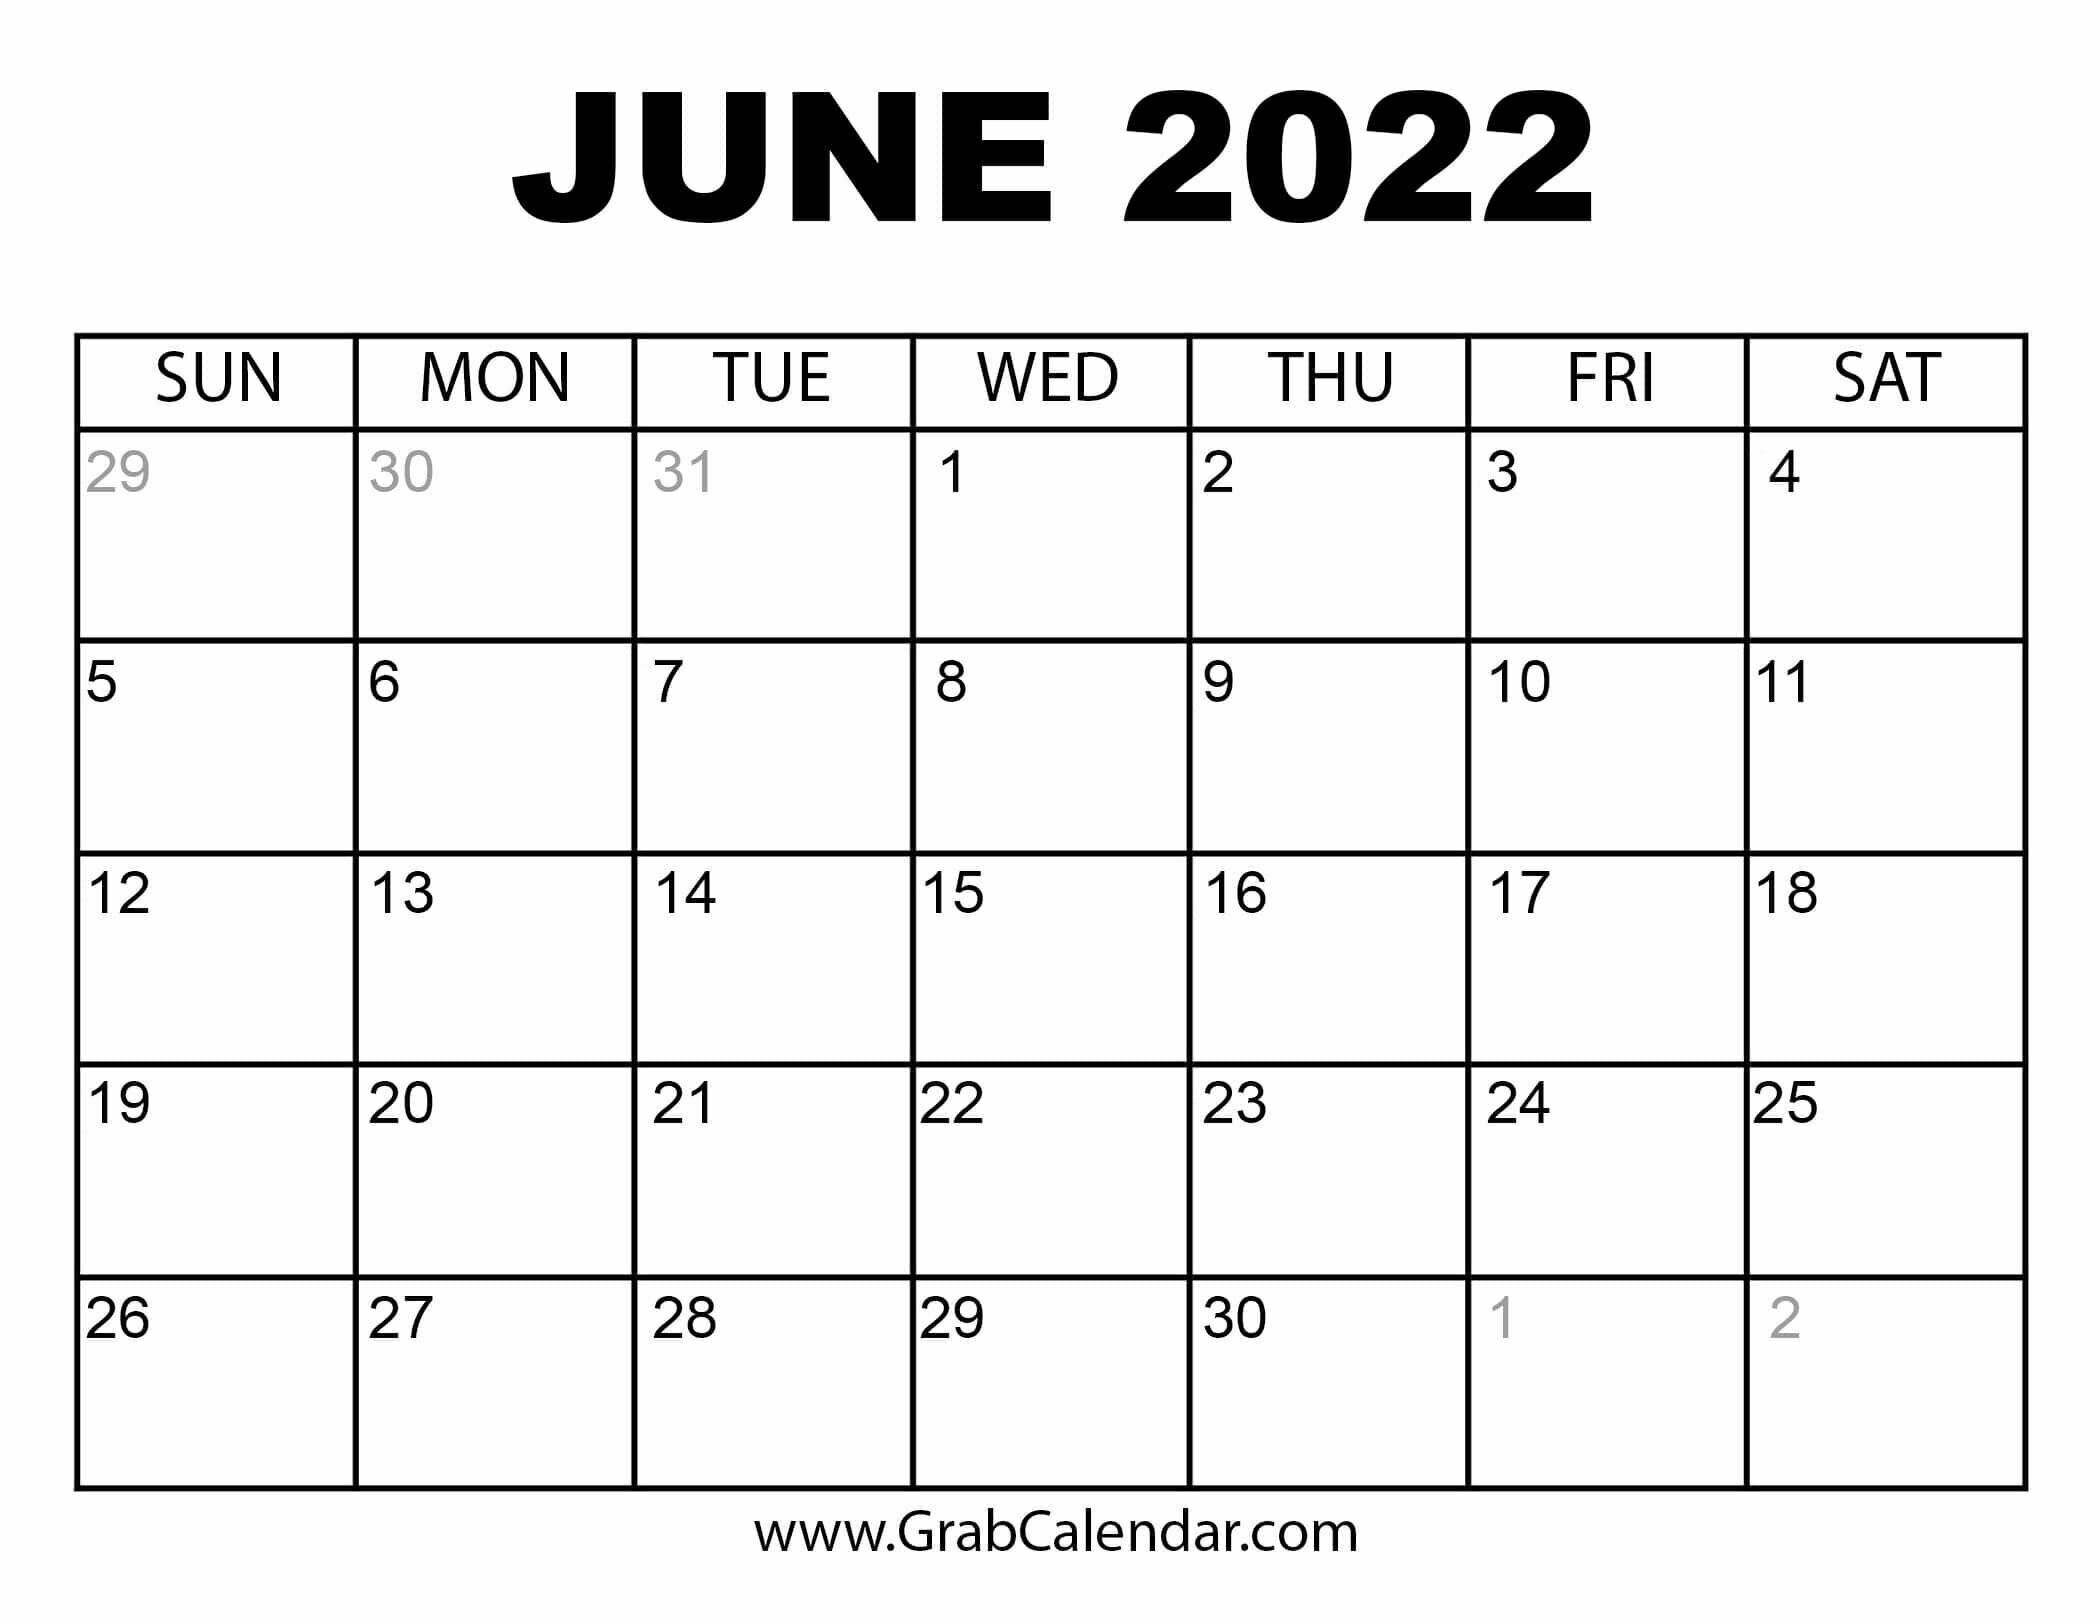 Avatar: June 2022 Calendar